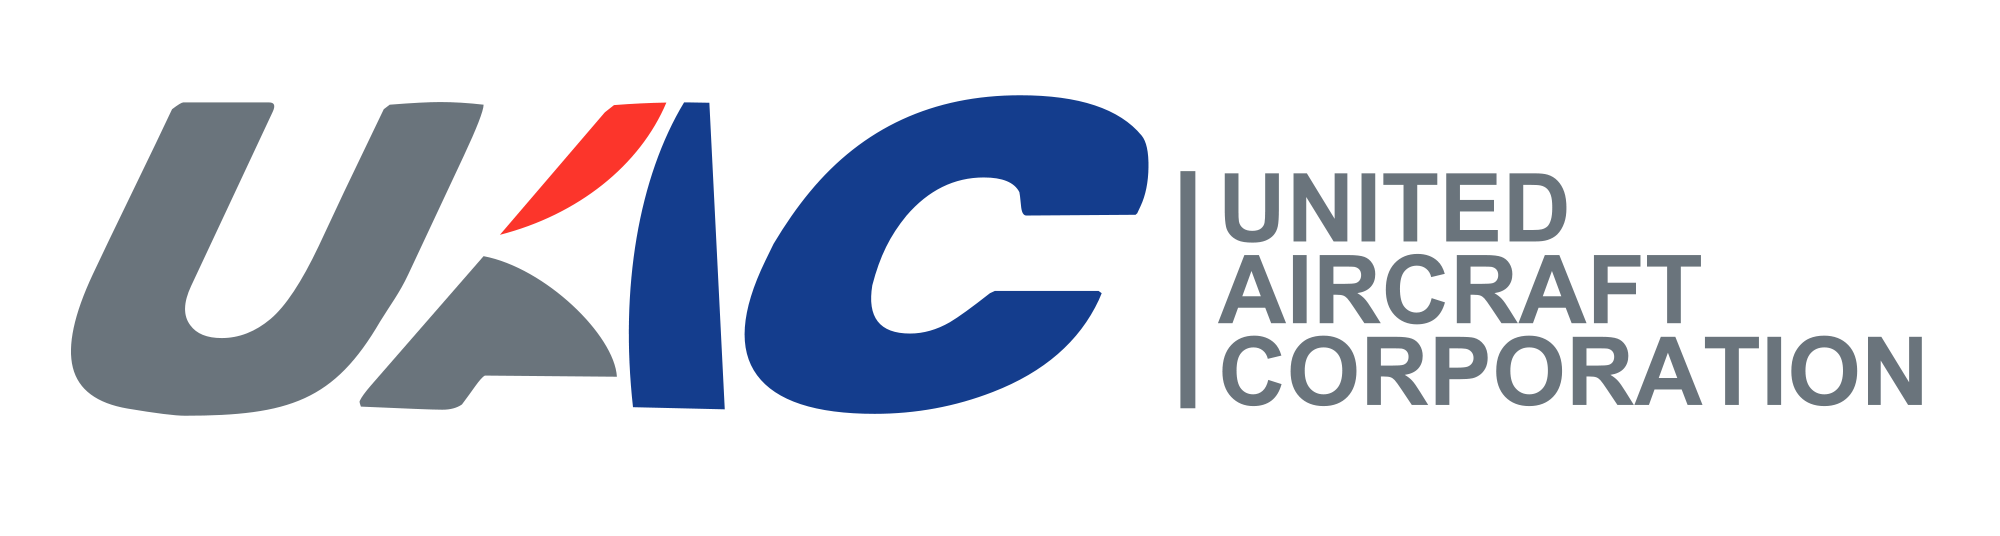 United Aircraft Corporation Brand Logo